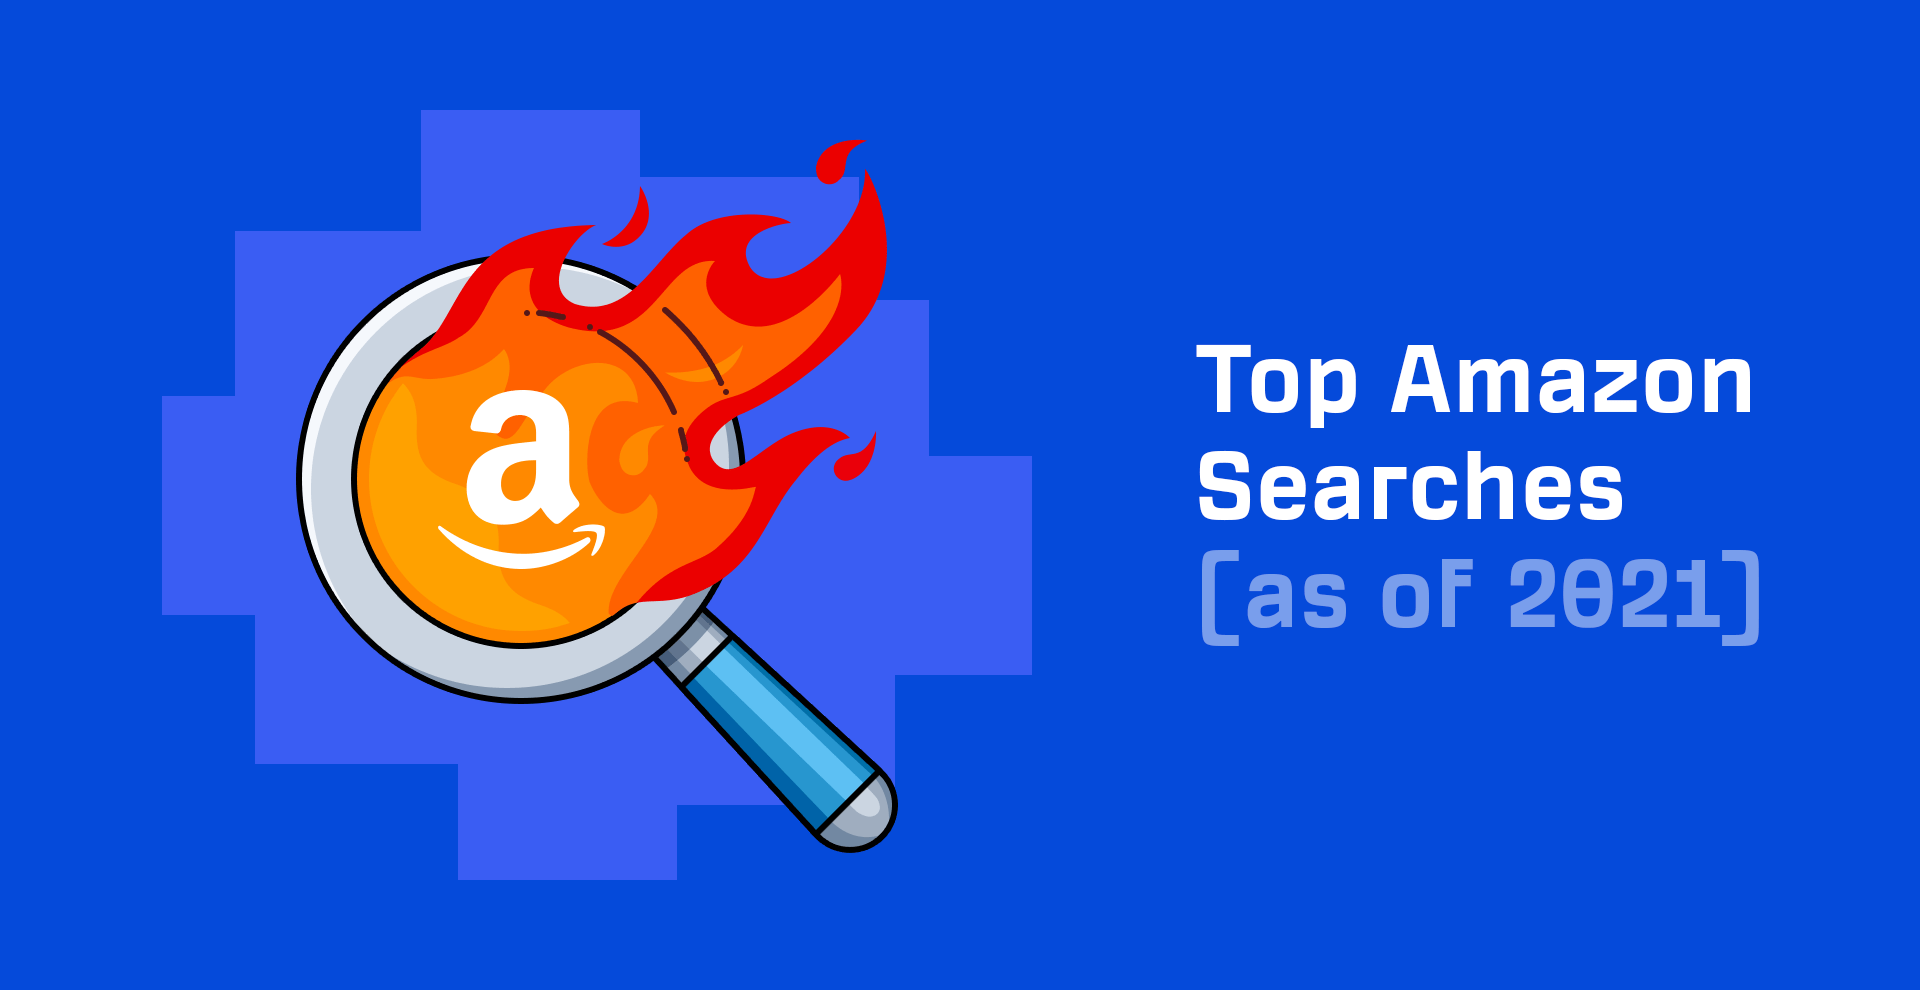 Top Amazon Searches